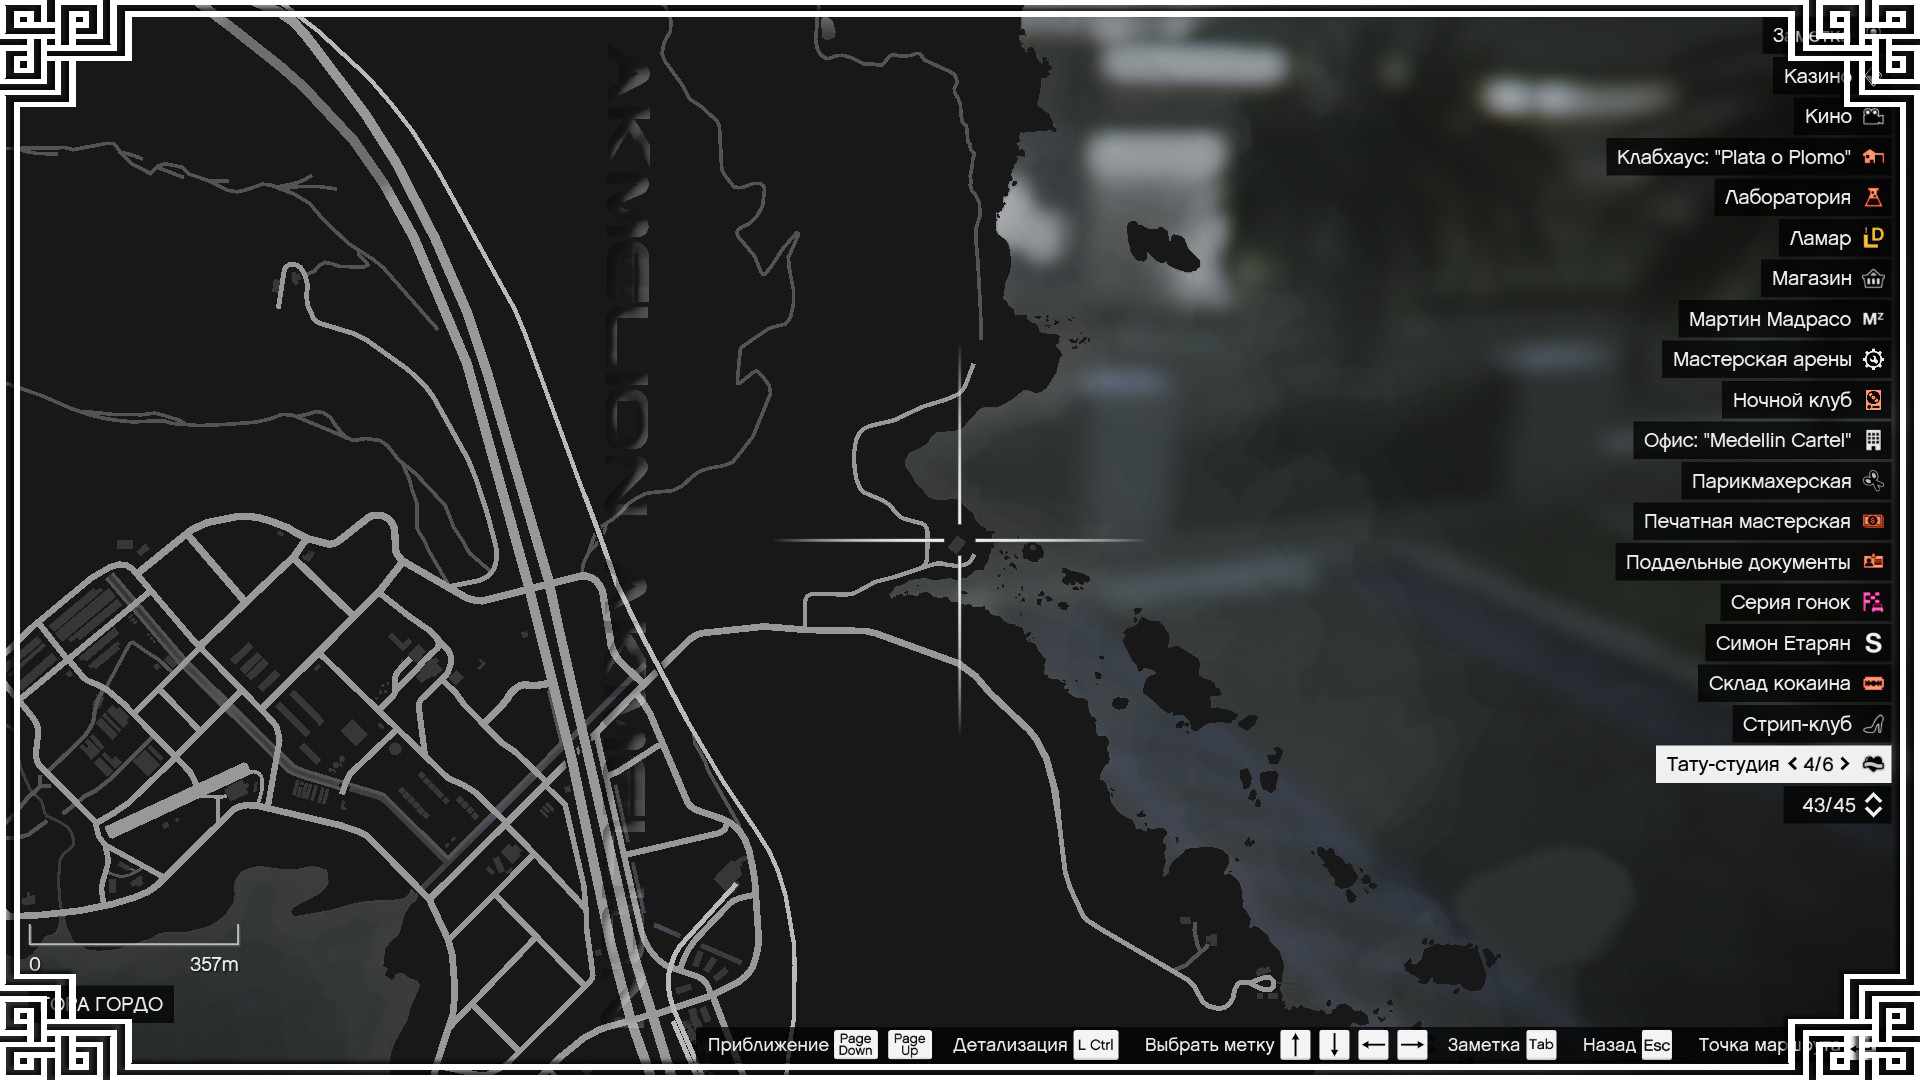 GTA 5 - All Action Figures Locations (GTA Online)